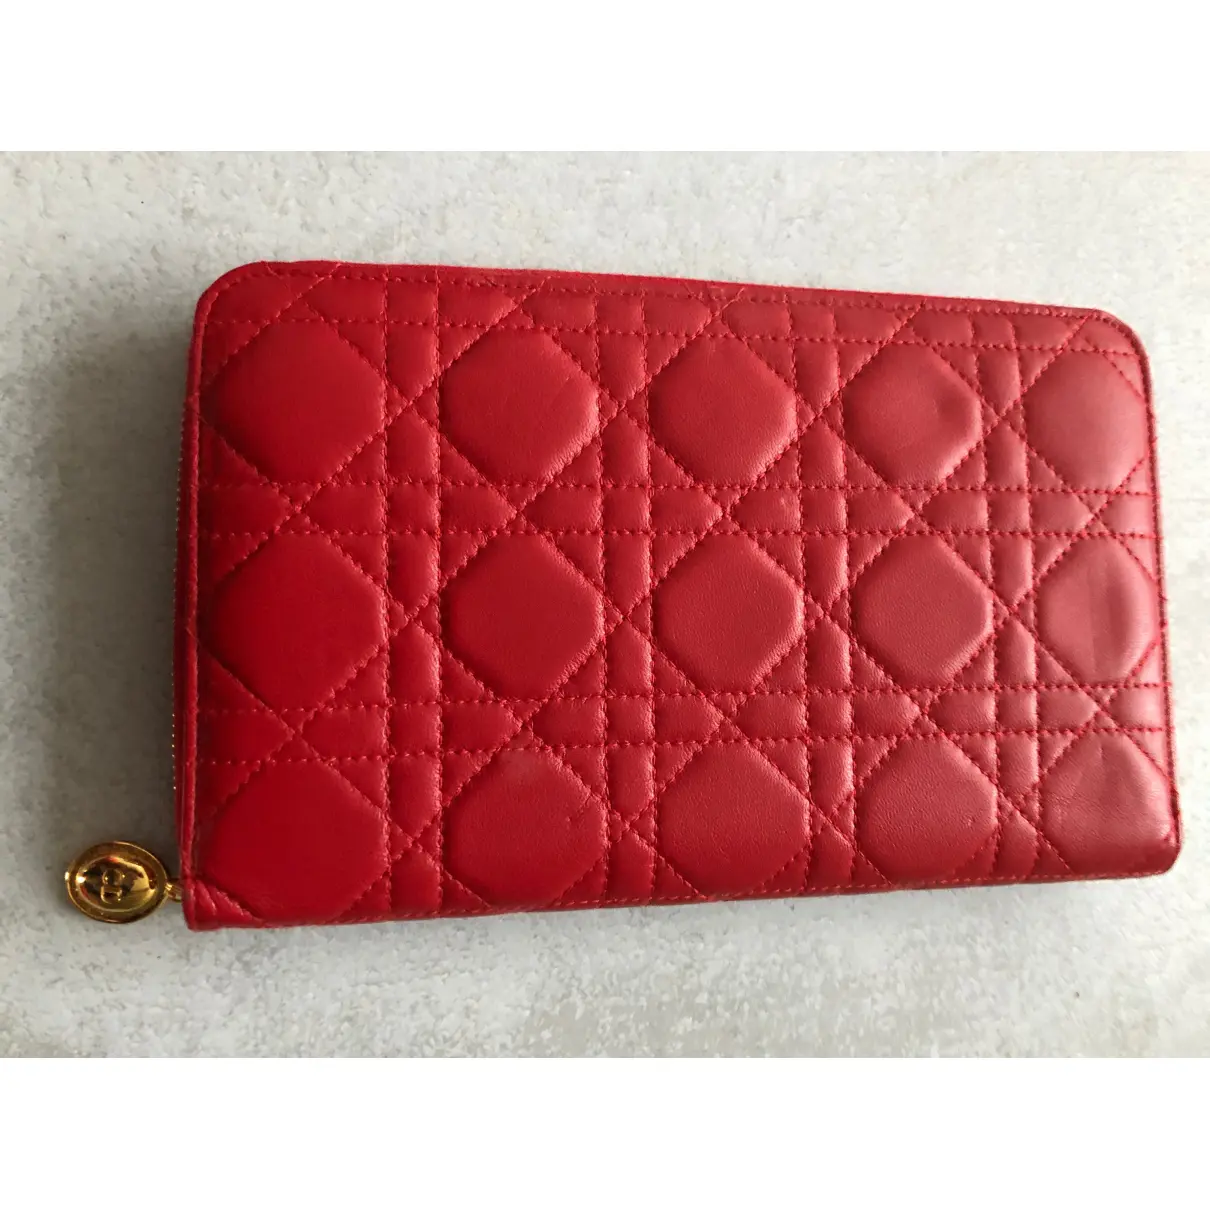 Buy Dior Miss Dior leather wallet online